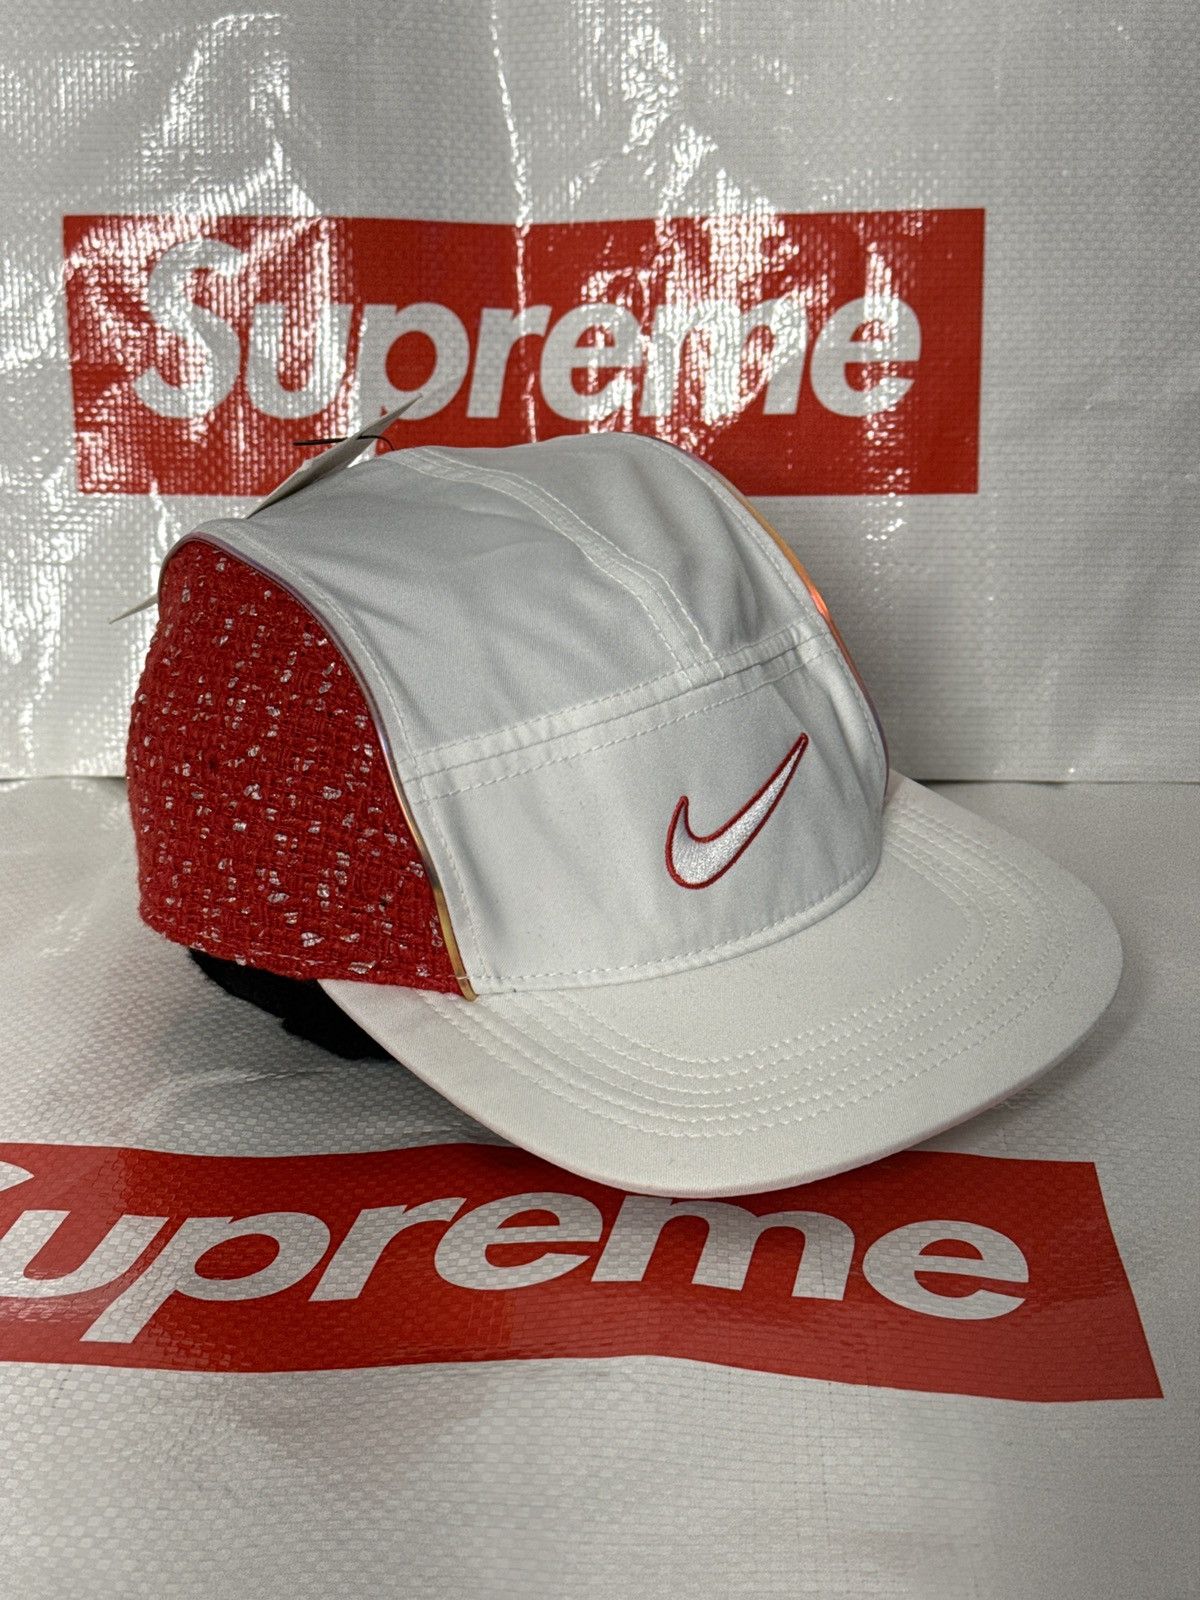 Supreme Supreme Nike boucle running hat cap | Grailed